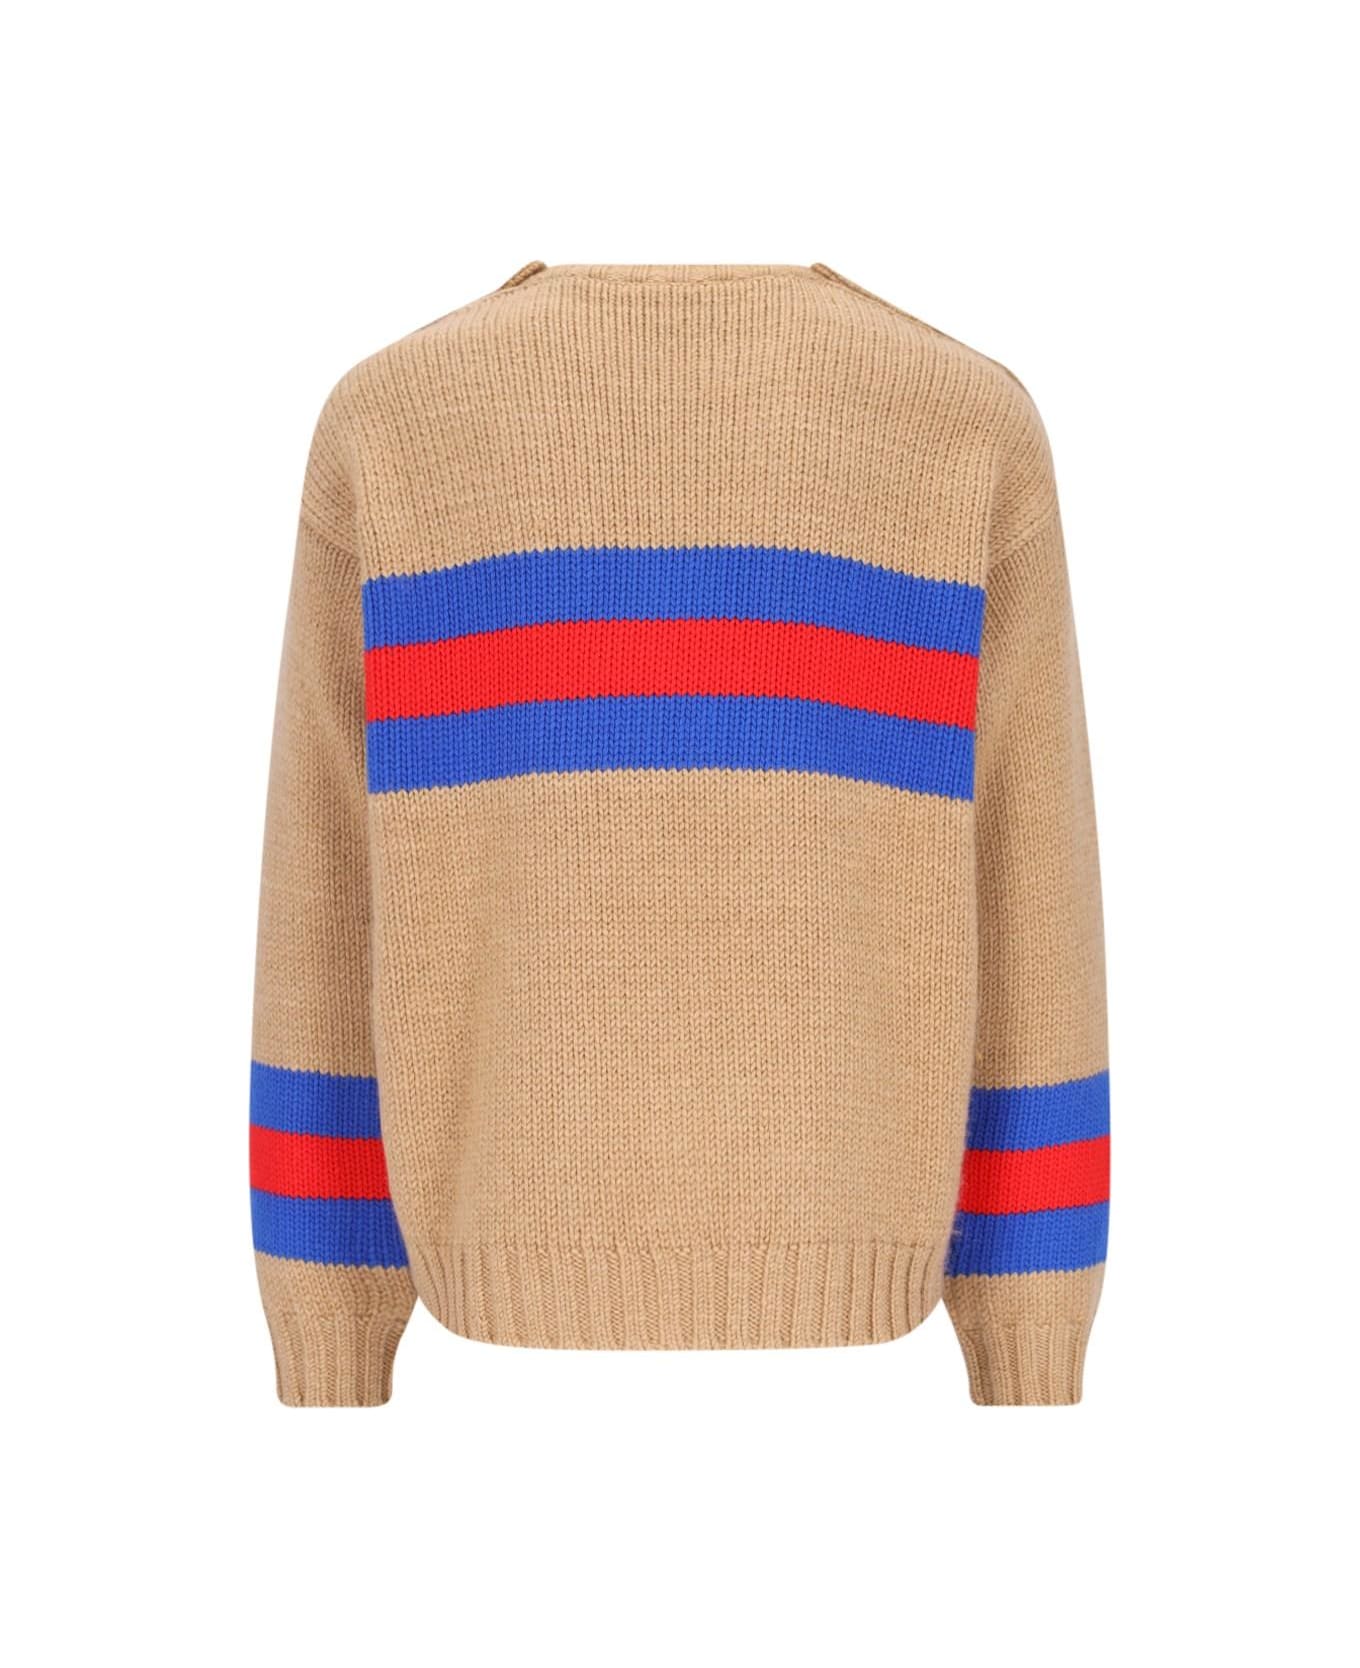 Gucci Wool Sweater - Camel